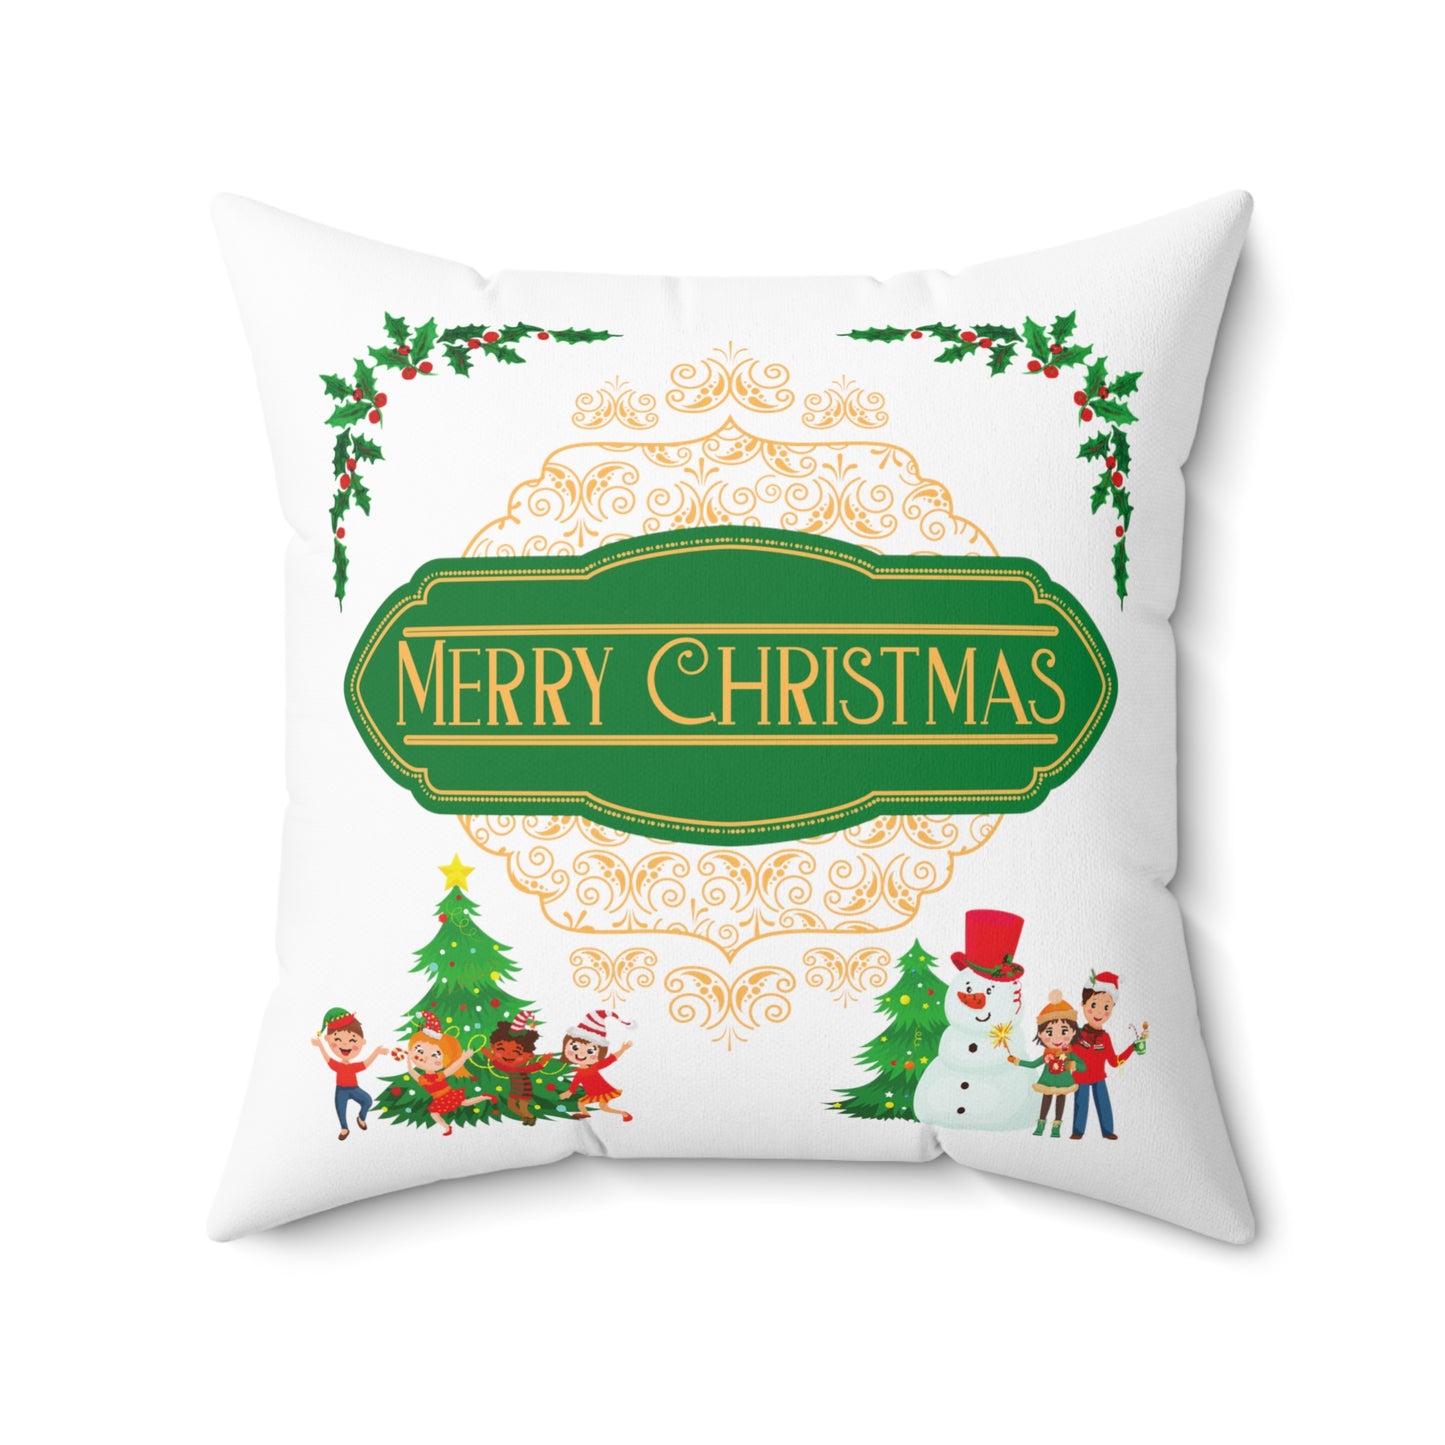 Merry Christmas Spun Polyester Sqaure Pillow, Green